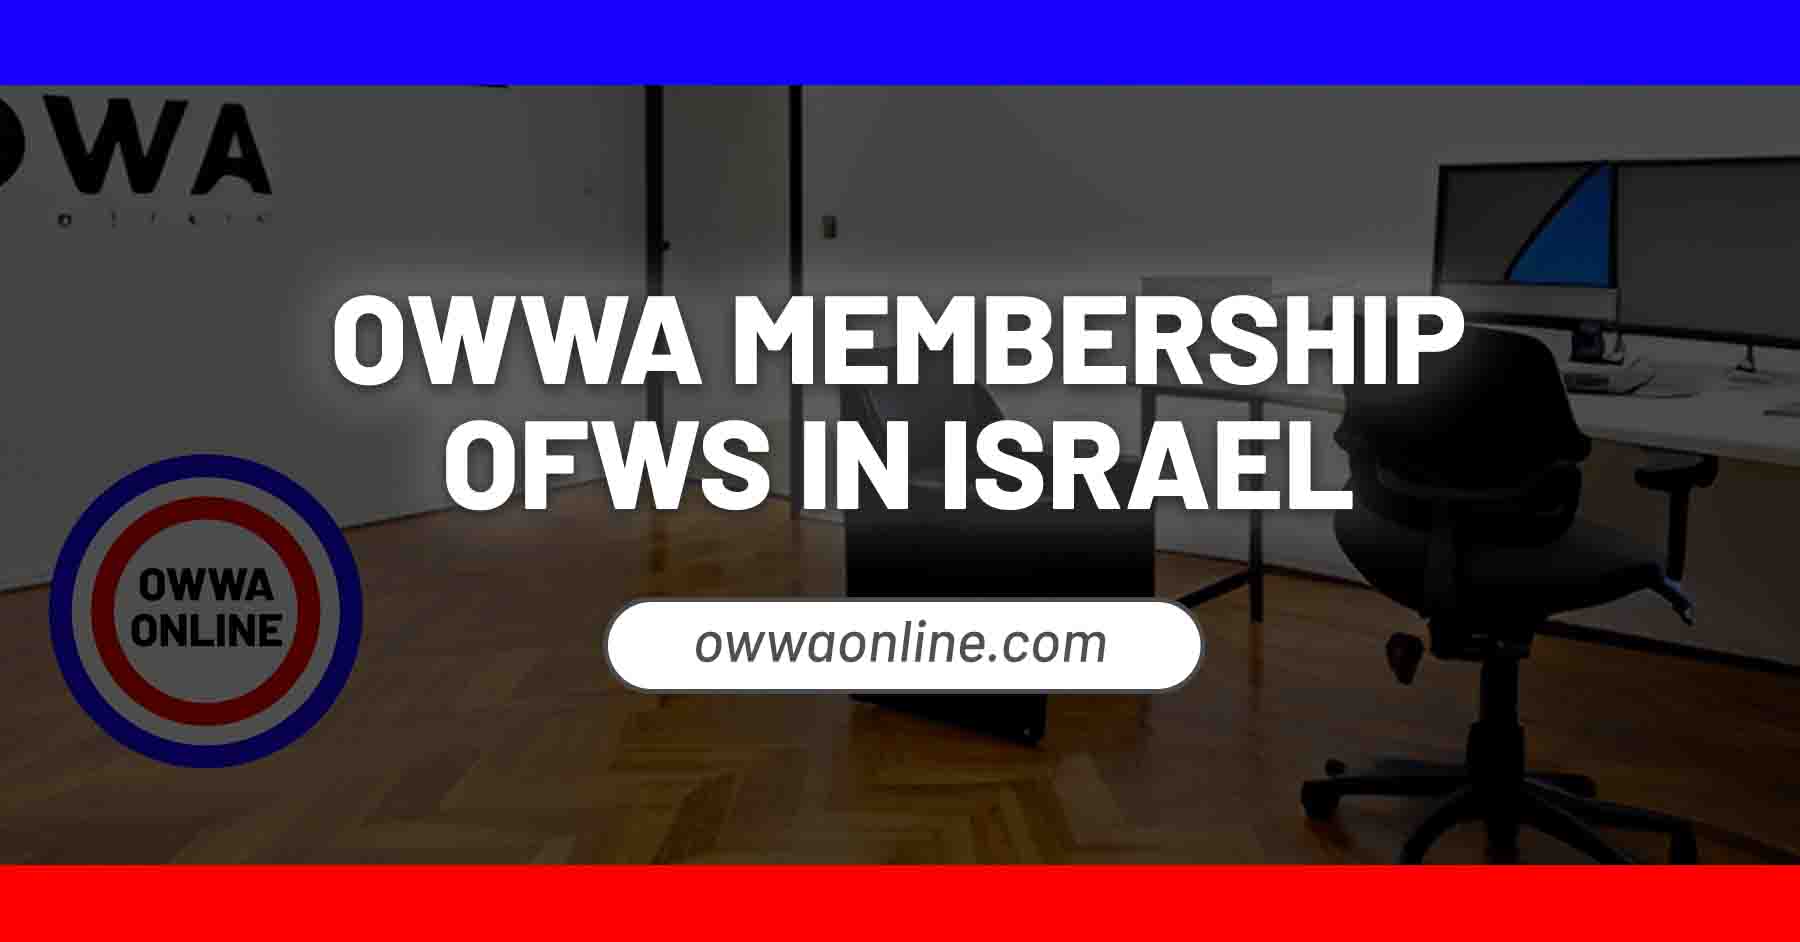 owwa appointment israel renewal application